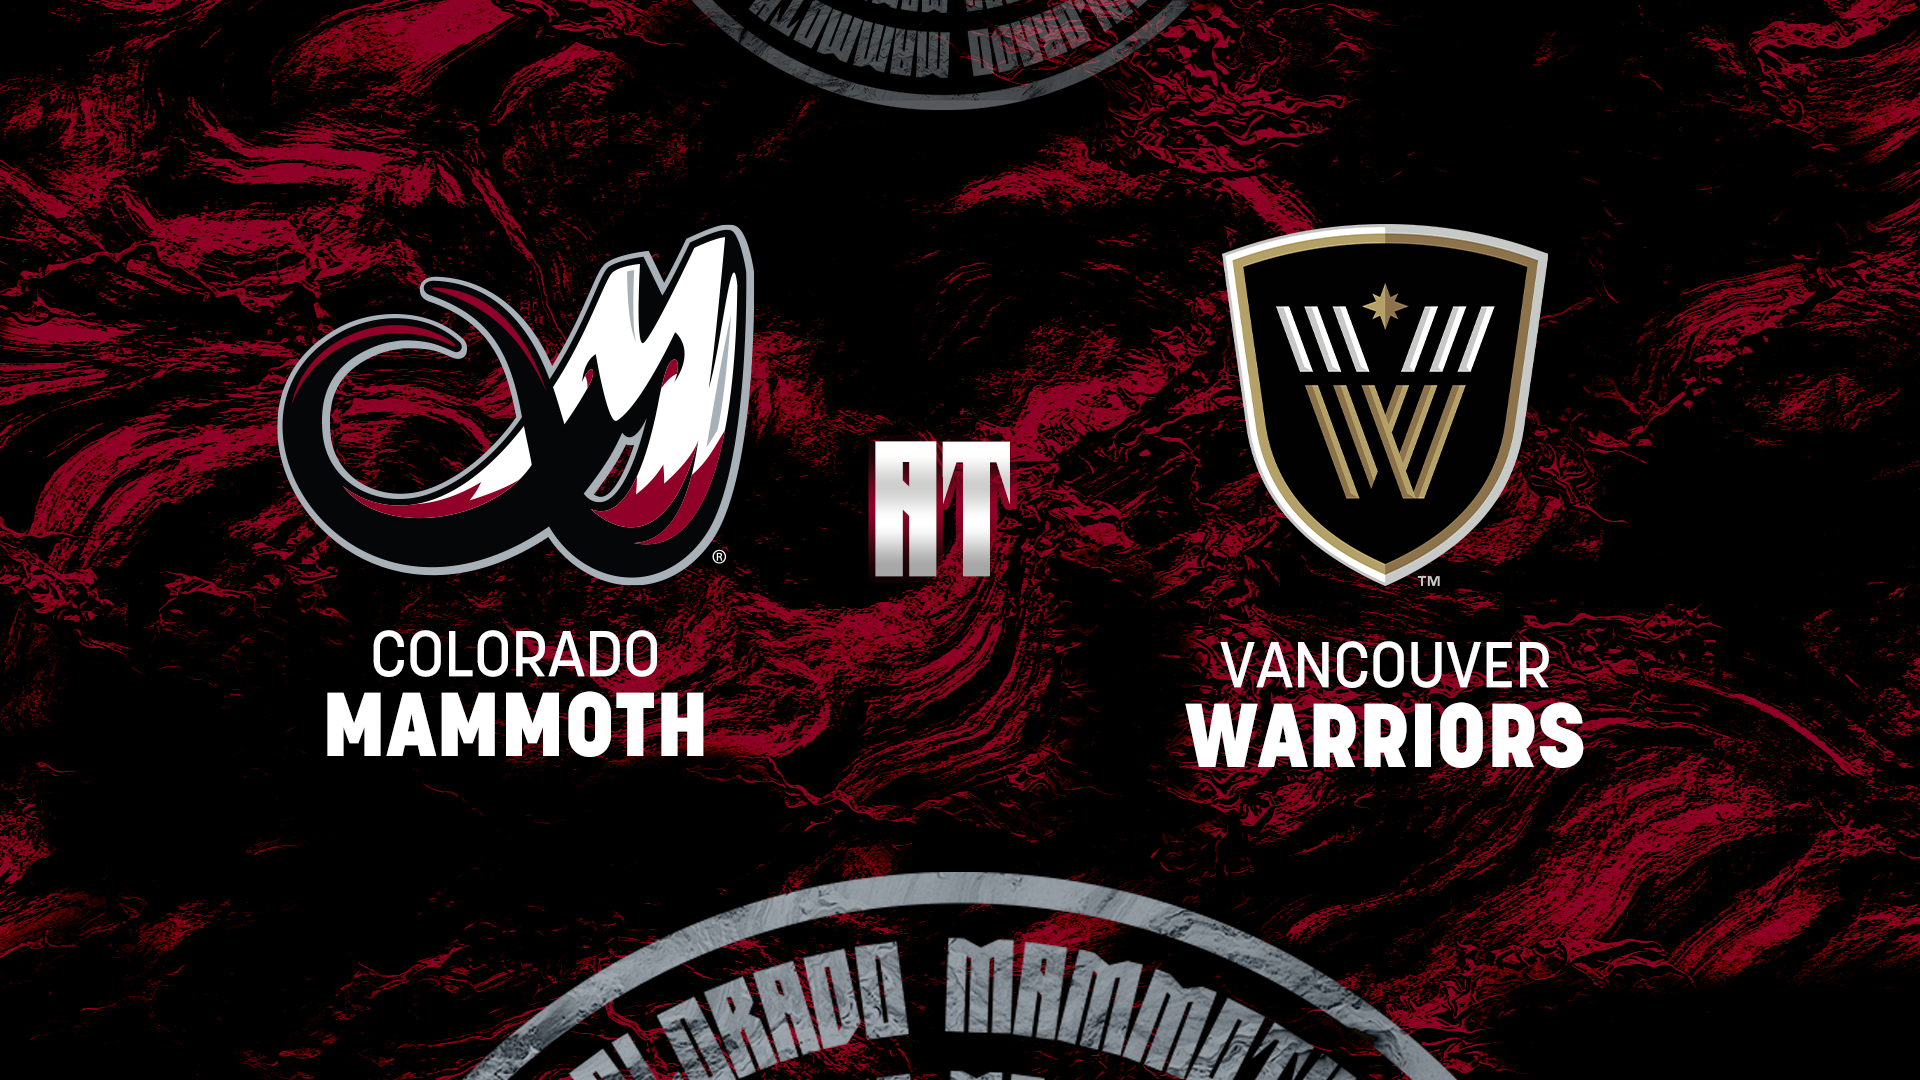 Mammoth vs. Warriors matchup graphic